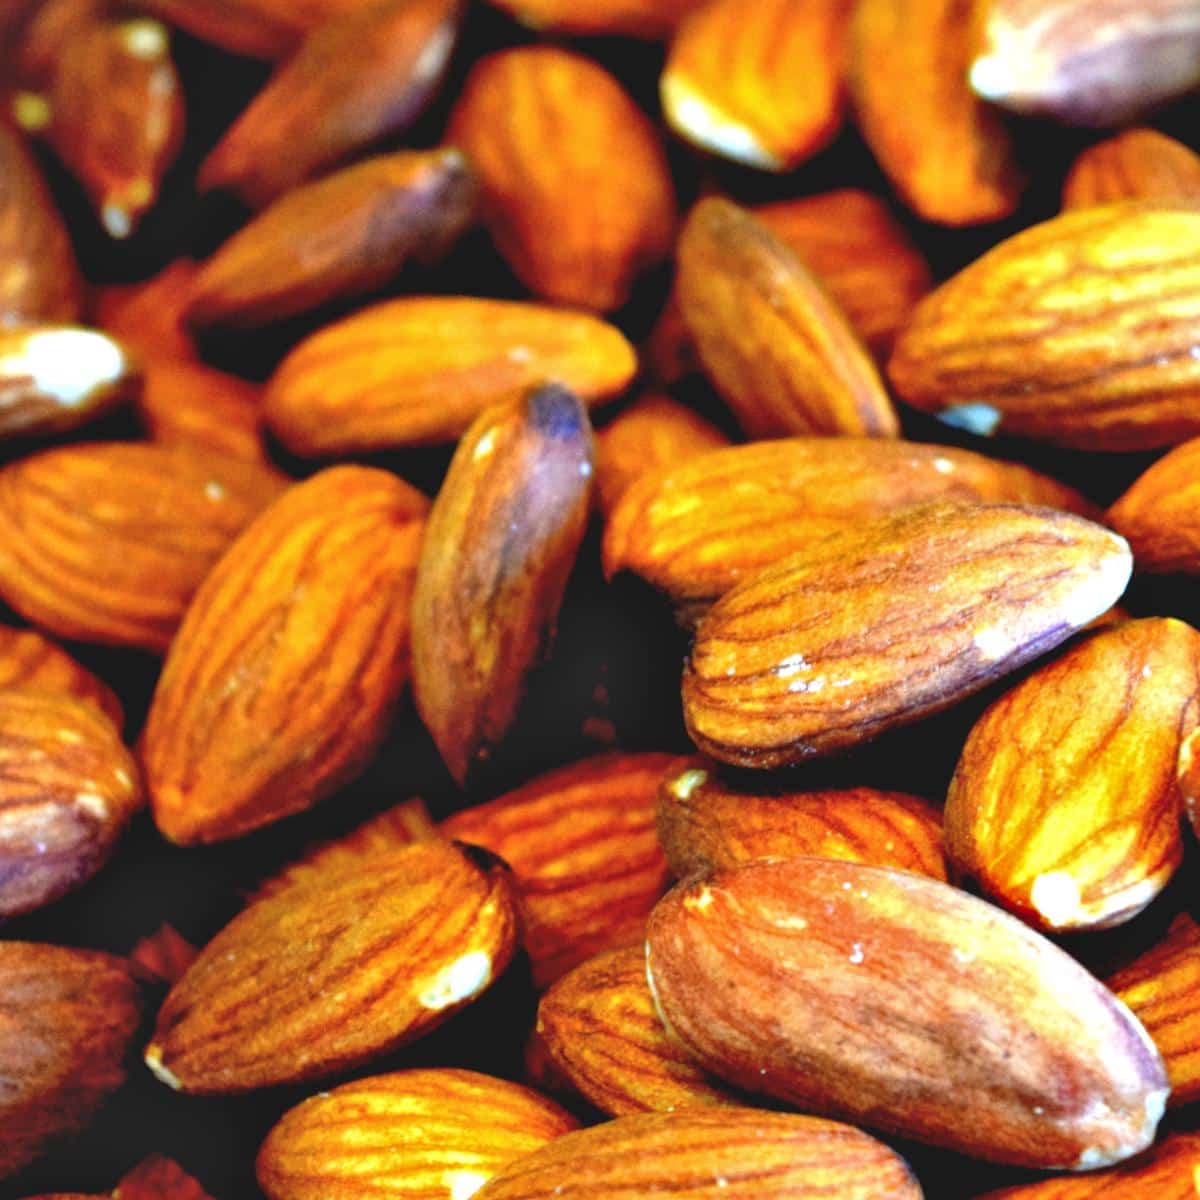 Fresh almonds in warm light